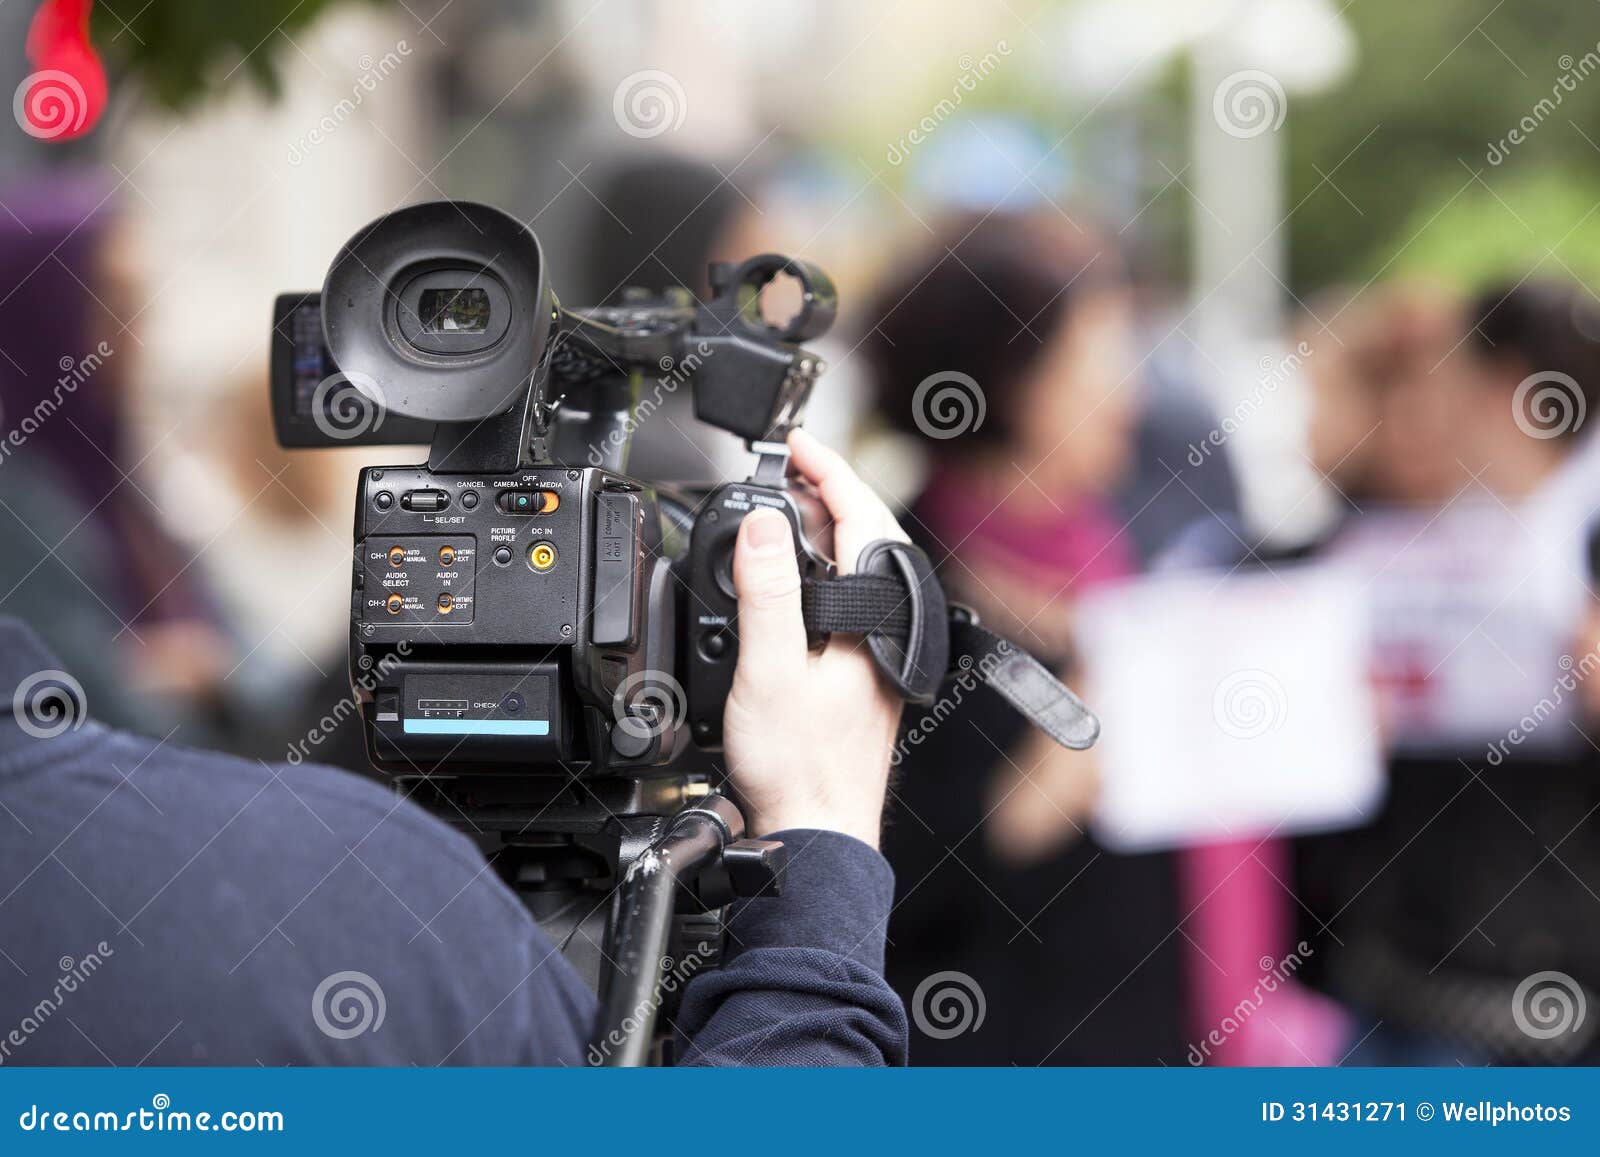 Cameraman stock image. Image of information, broadcasting - 31431271